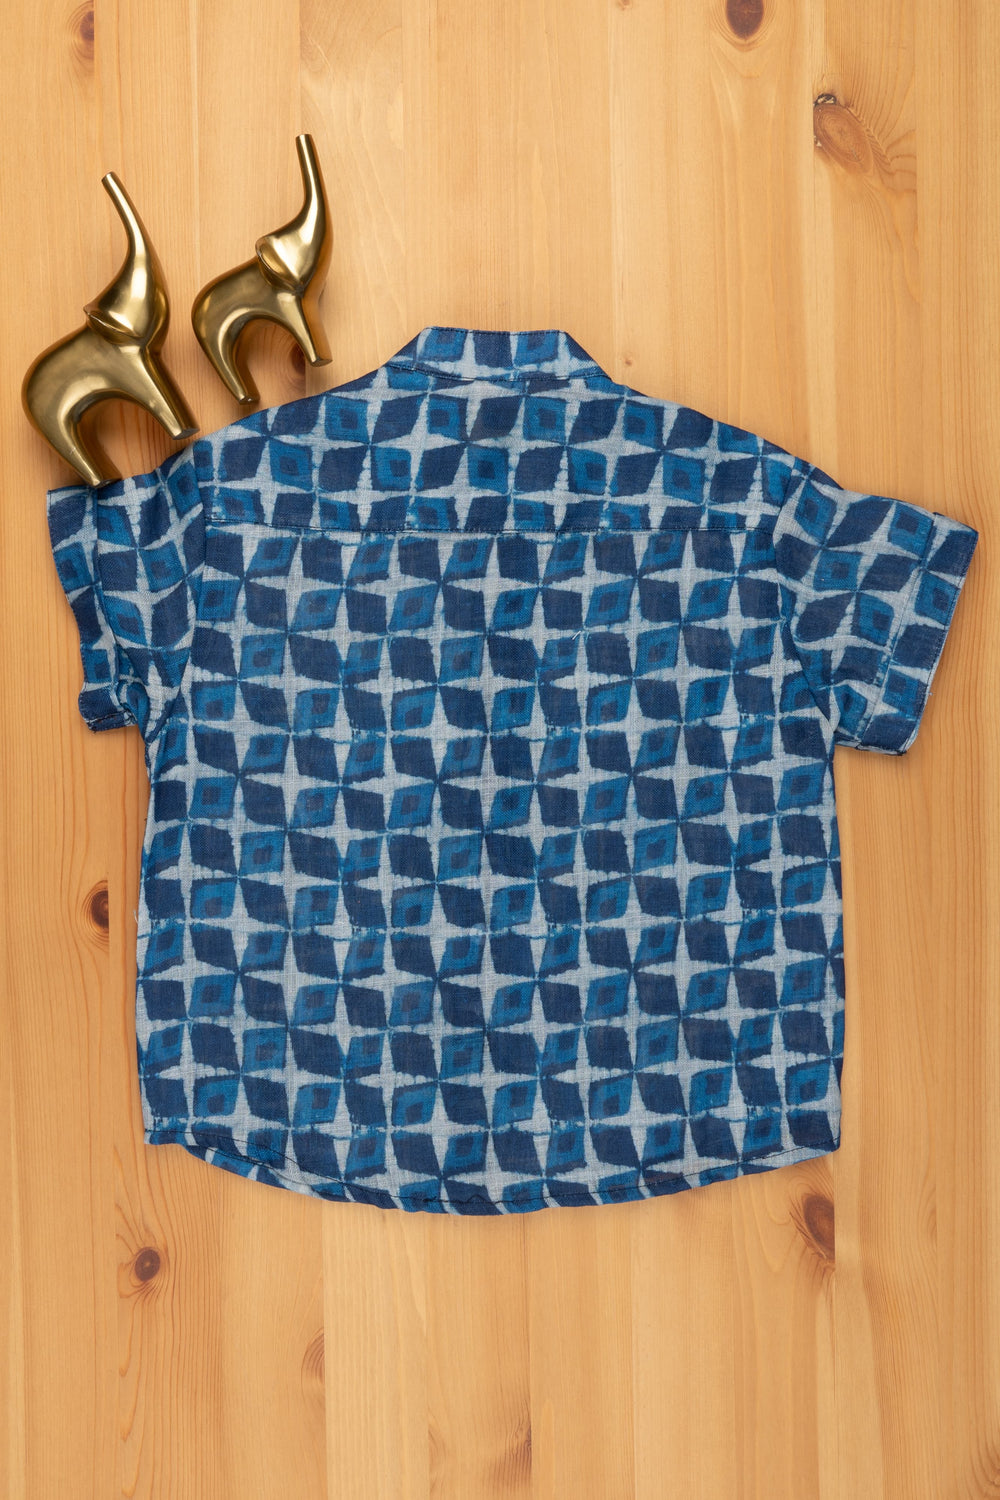 The Nesavu Boys Linen Shirt Boho Chic in Indigo: Linen Boys' Shirt with Artistic Prints for a Free-Spirited Style Nesavu Linen Boys Shirt with Artistic Prints | Boys Premium Shirt | The Nesavu